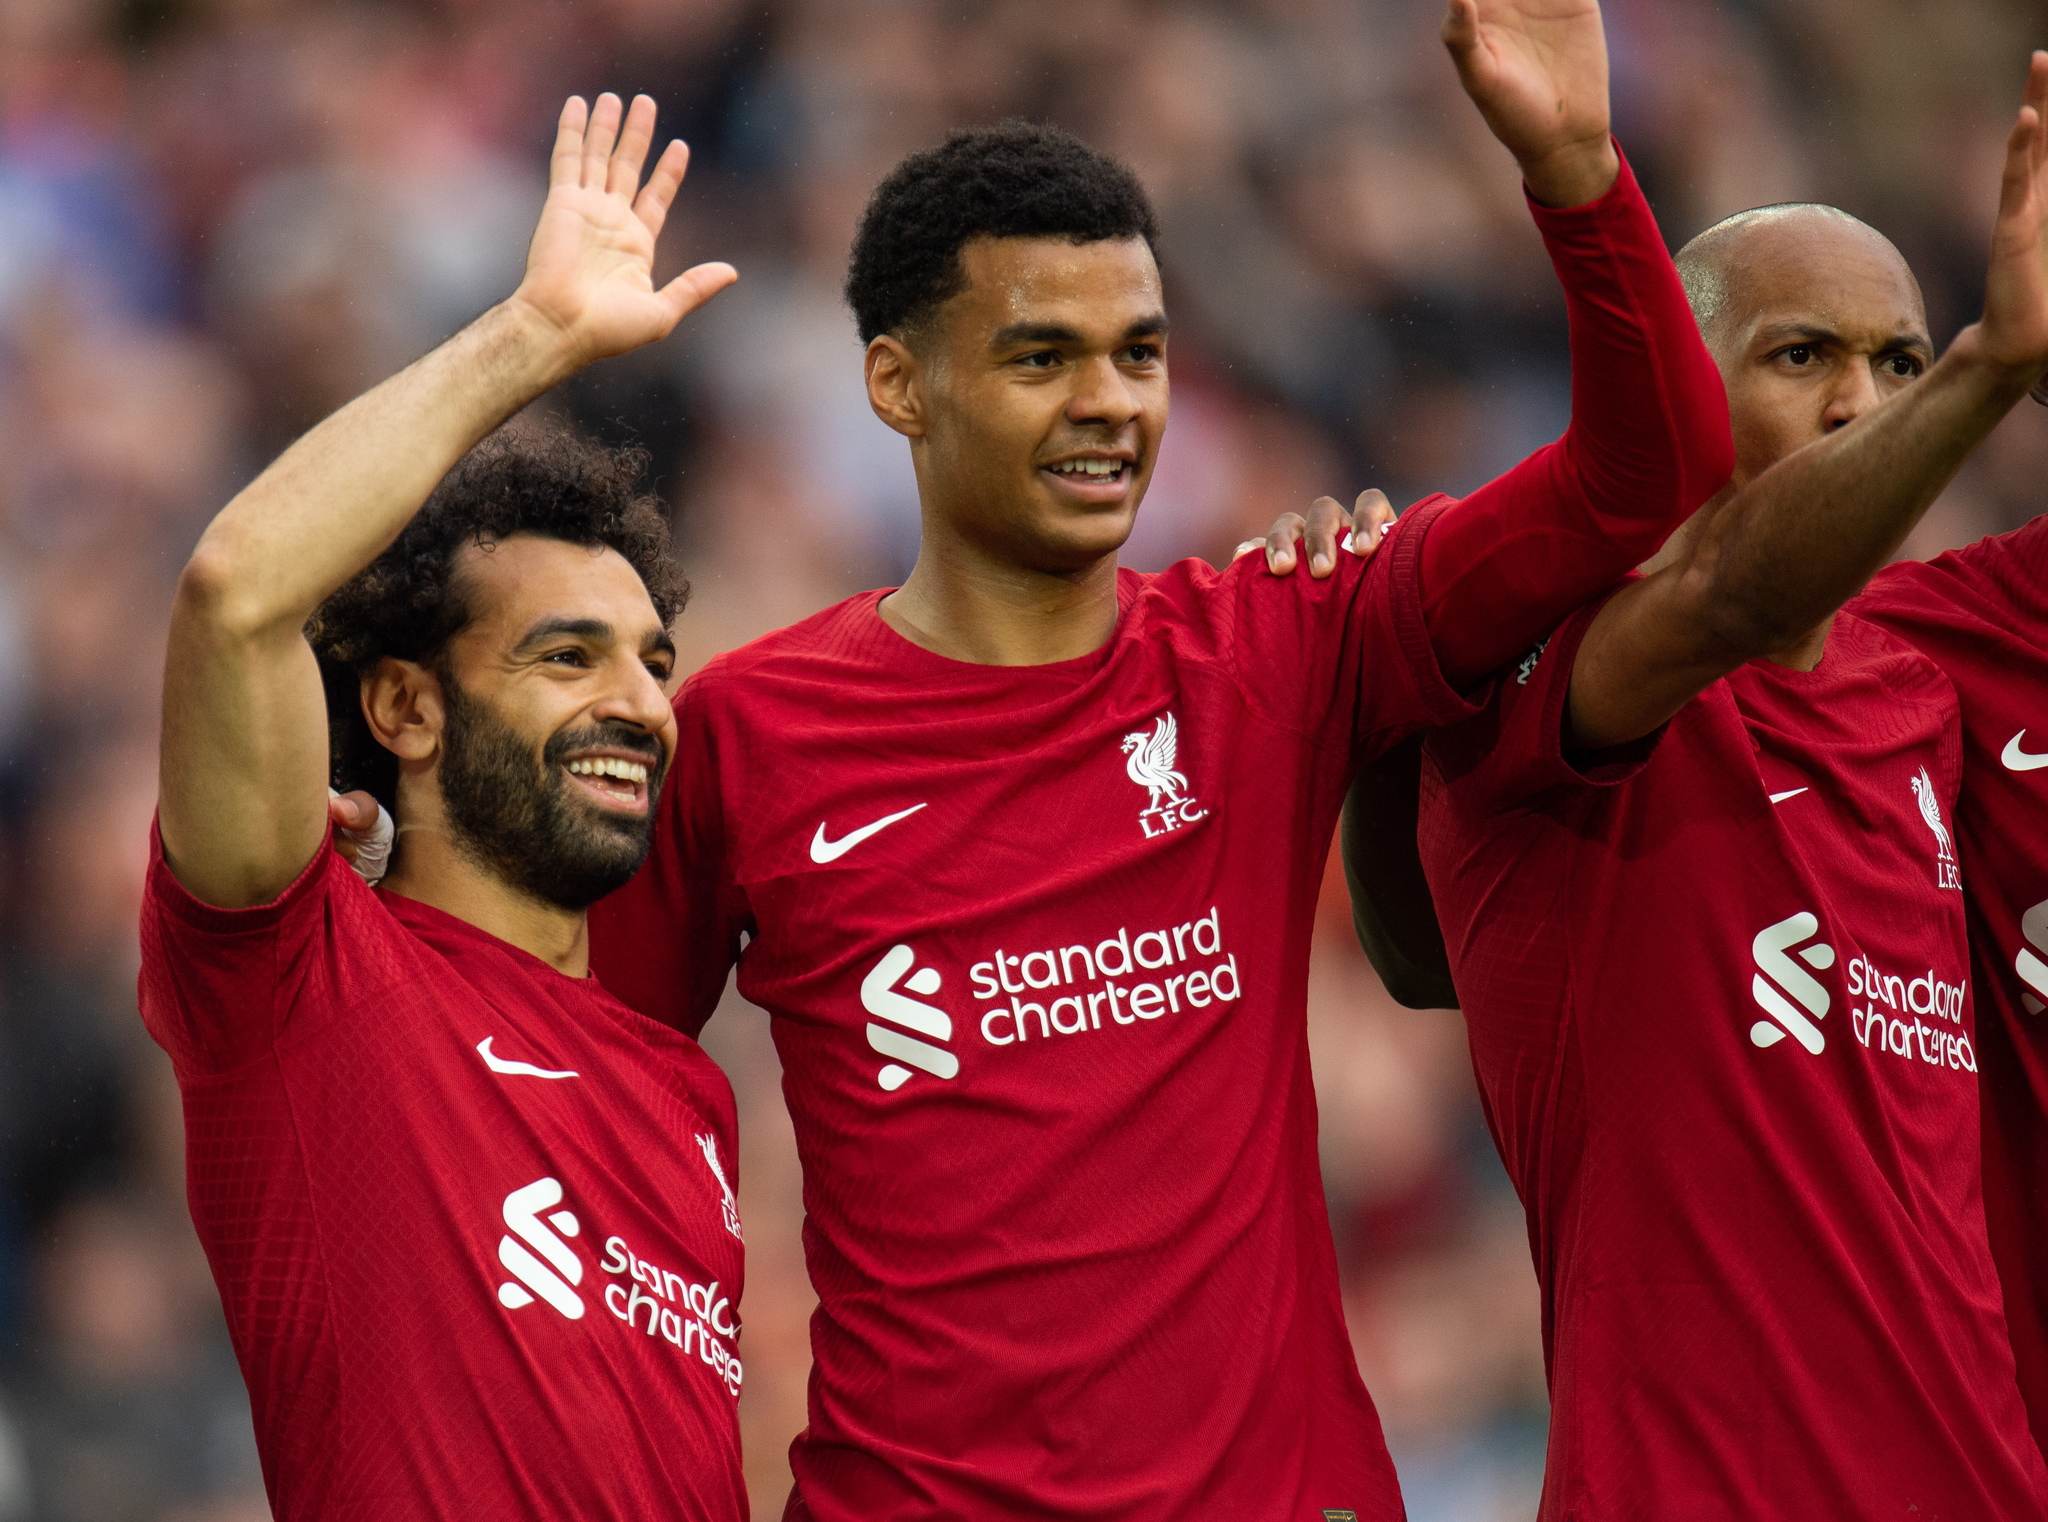 Liverpools Mohamed Salah (L) celebrates with his teammate Cody Gapko (R)